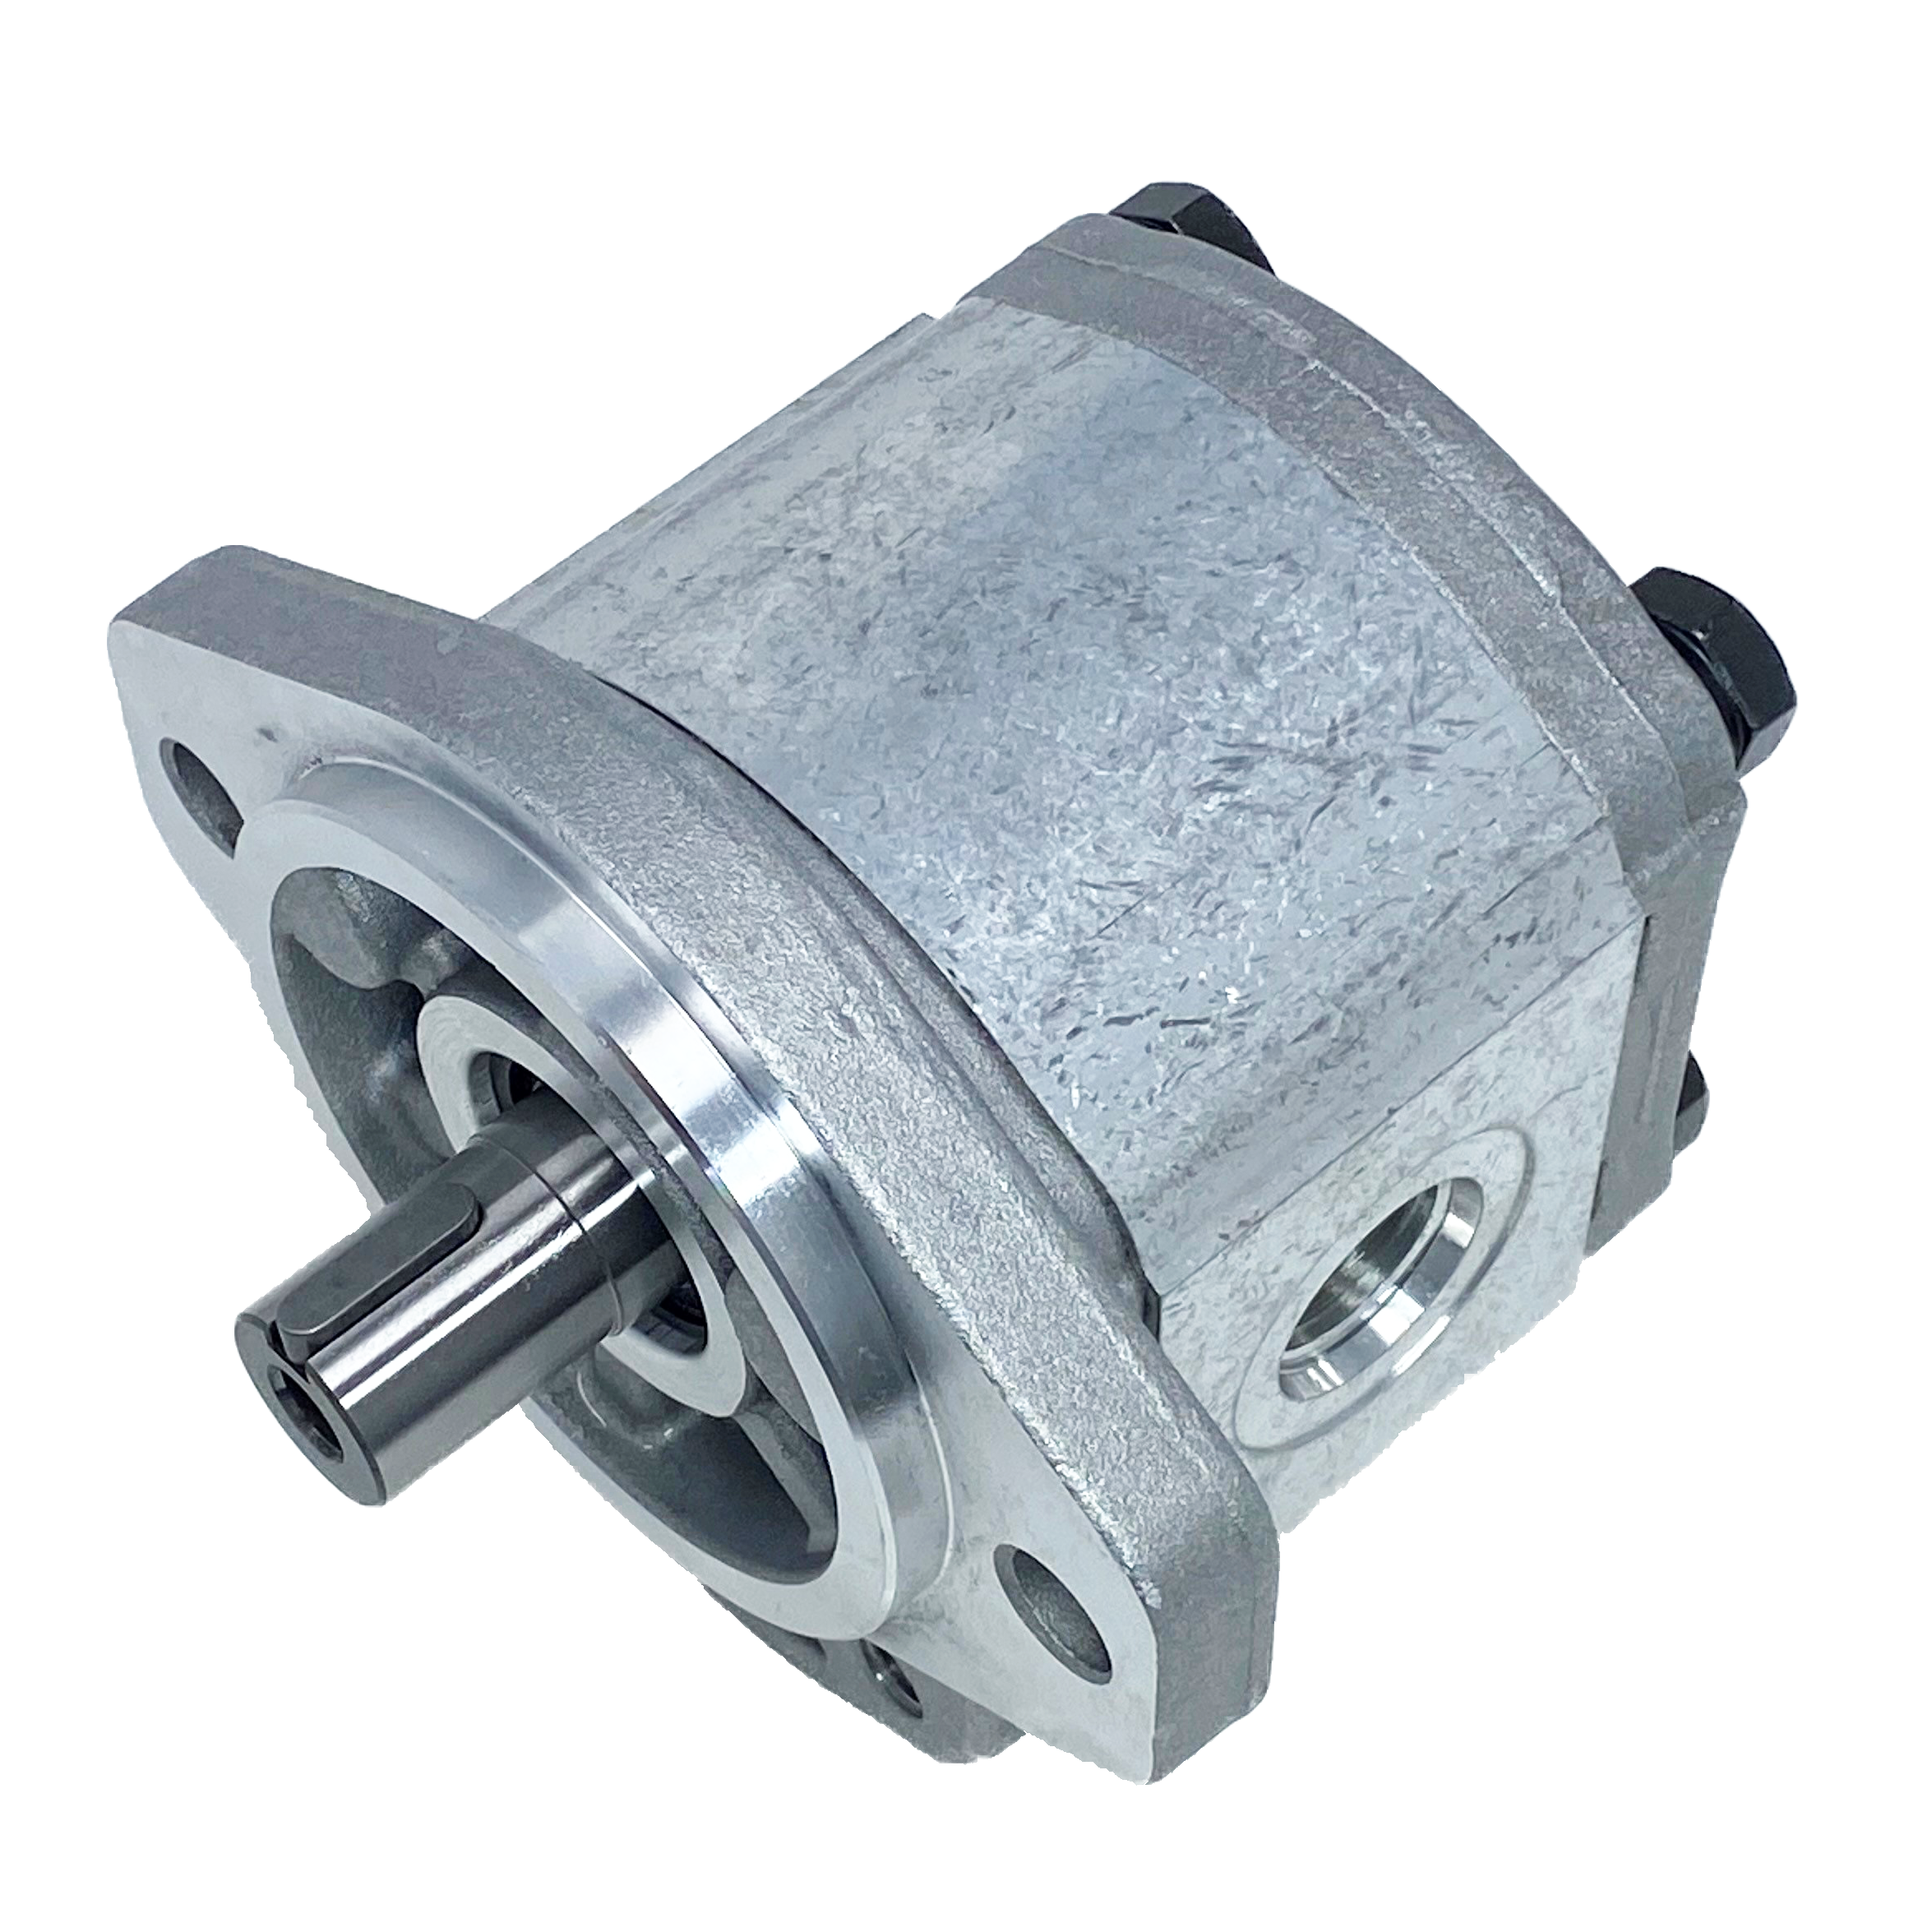 PLM20.14R0-50S1-LOC/OD-N-EL : Casappa Polaris Gear Motor, 14.53cc, 3625psi Rated, 3500RPM, Reversible Rear External Drain, 3/4" Bore x 3/16" Key Shaft, SAE A 2-Bolt Flange, 0.625 (5/8") #10 SAE Inlet, 0.75 (3/4") #12 SAE Outlet, Aluminum Body & Flange